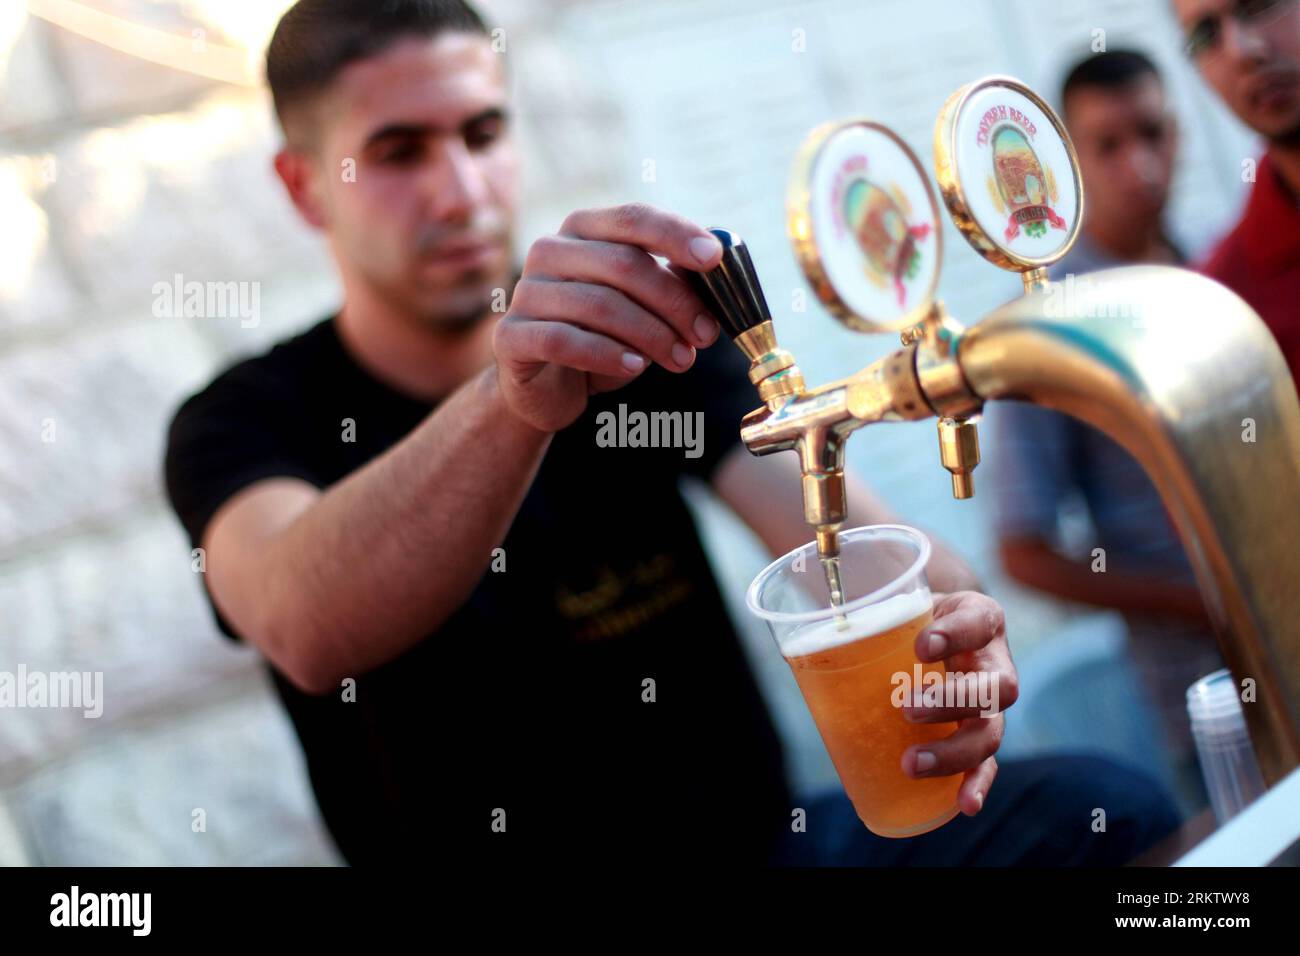 Bildnummer: 58561120  Datum: 06.10.2012  Copyright: imago/Xinhua A Palestinian pours Beer during the 2012 Taybeh Oktoberfest beer festival in the West Bank Christian village of Taybeh, near Ramallah, on Oct. 6, 2012. The annual beer festival is put on by the Taybeh brewery, the only such establishment in the predominantly Muslim Palestinian territories. (Xinhua/Fadi Arouri) MIDEAST- RAMALLAH- OKTOBERFEST- BEER PUBLICATIONxNOTxINxCHN Gesellschaft Alkohol Zapfhahn Becher Bierbecher Bierzapfen Objekte x0x xds 2012 quer     58561120 Date 06 10 2012 Copyright Imago XINHUA a PALESTINIAN pour Beer du Stock Photo